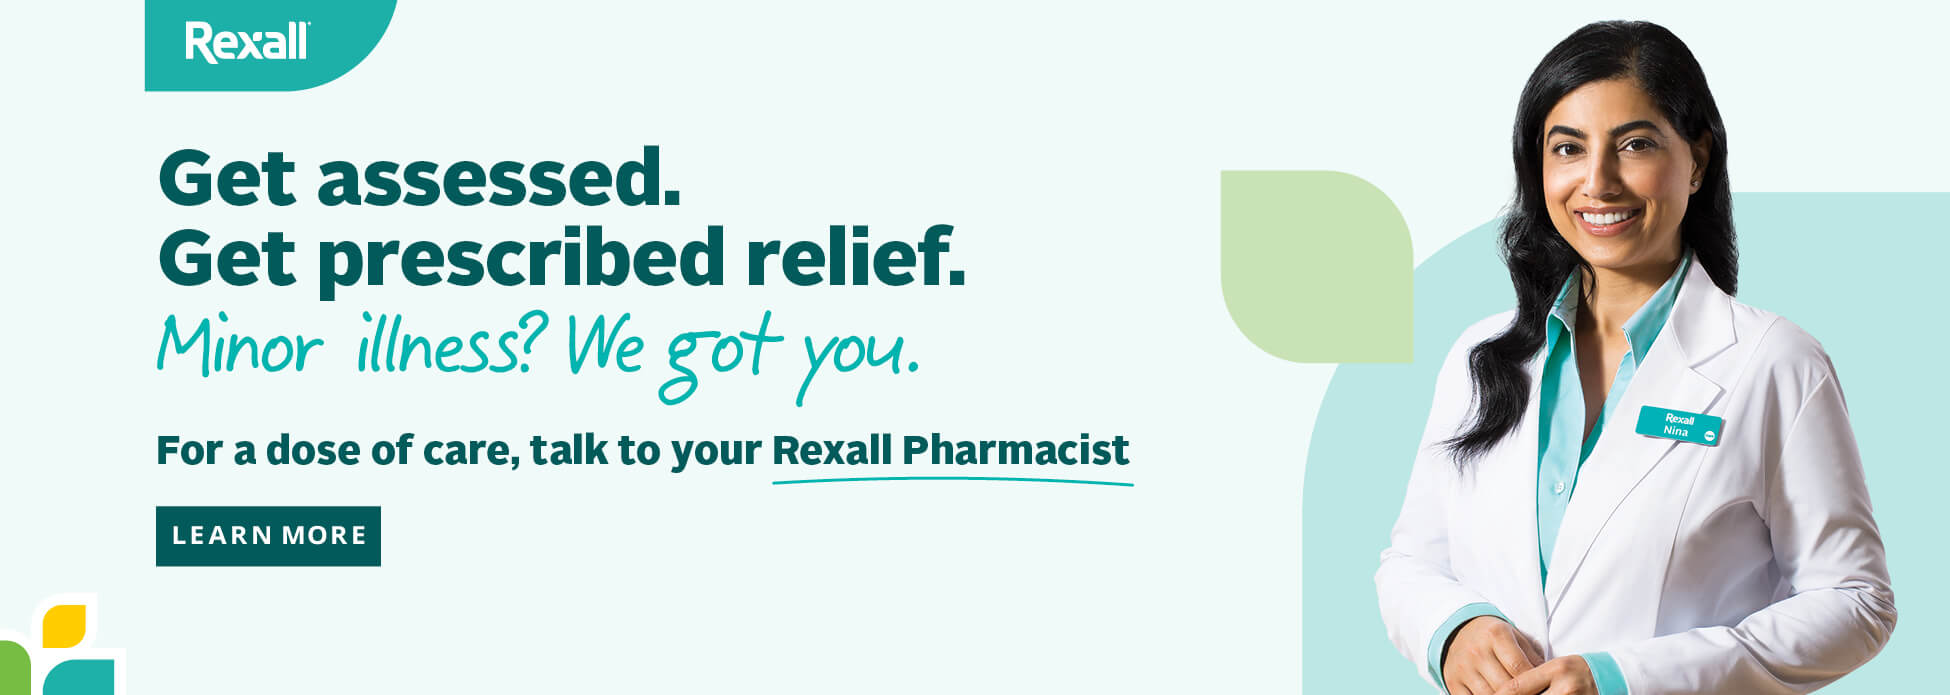 Get assessed. Get prescribed in relief.